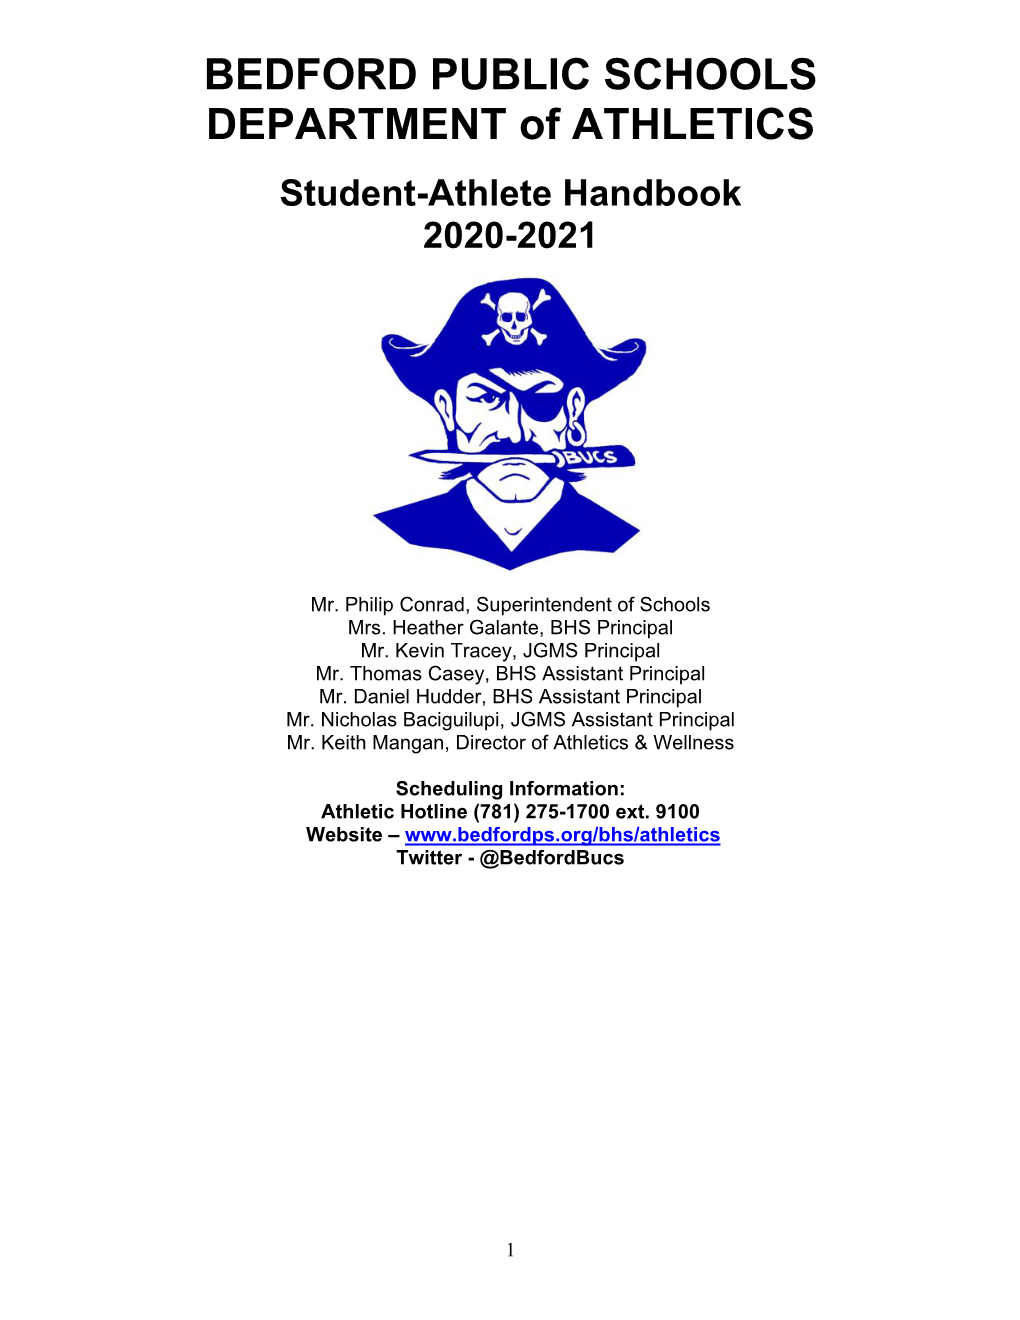 Athletics Handbook